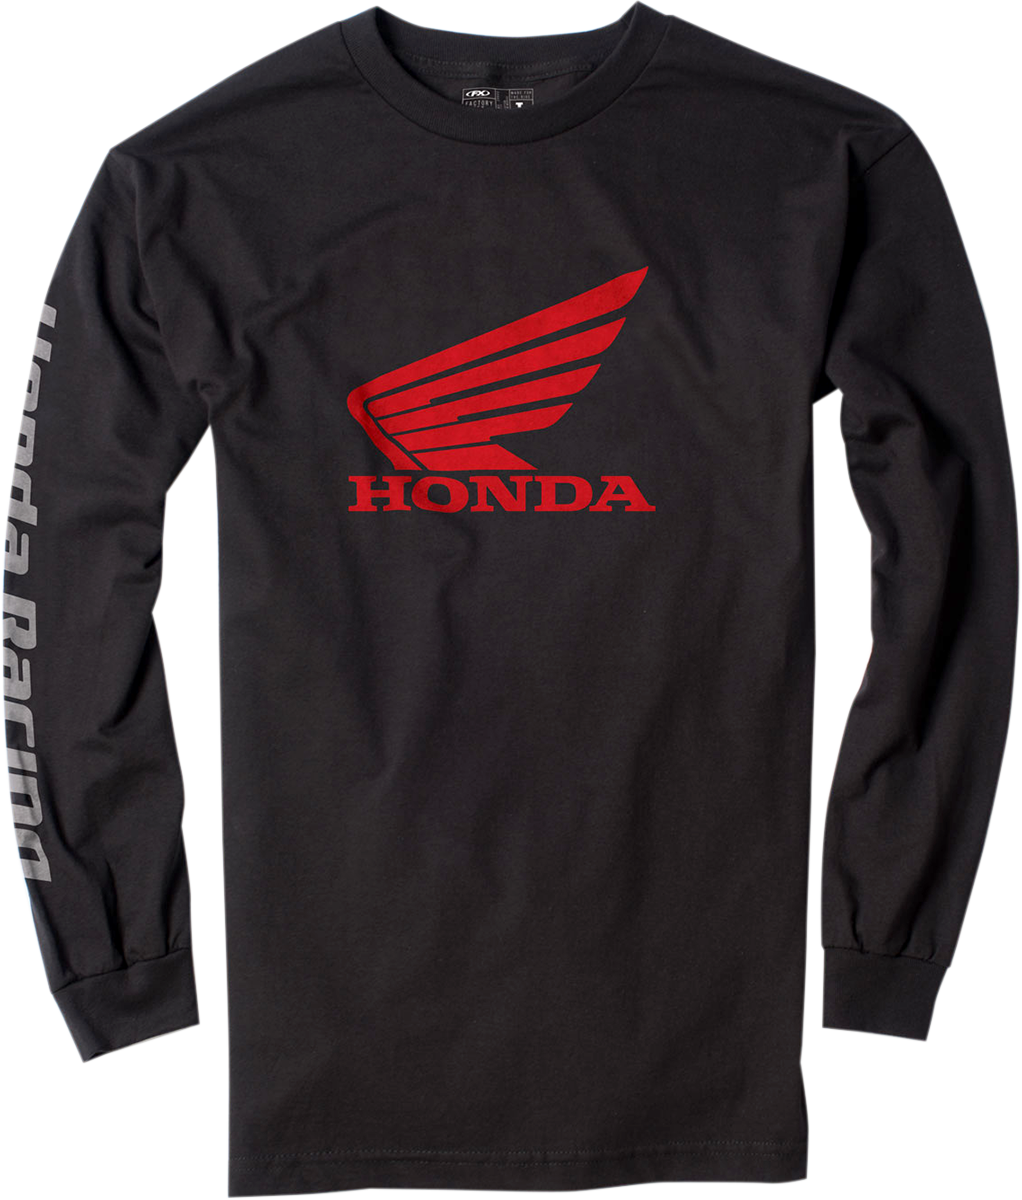 FACTORY EFFEX Honda Long-Sleeve T-Shirt - Black - Large 17-87314